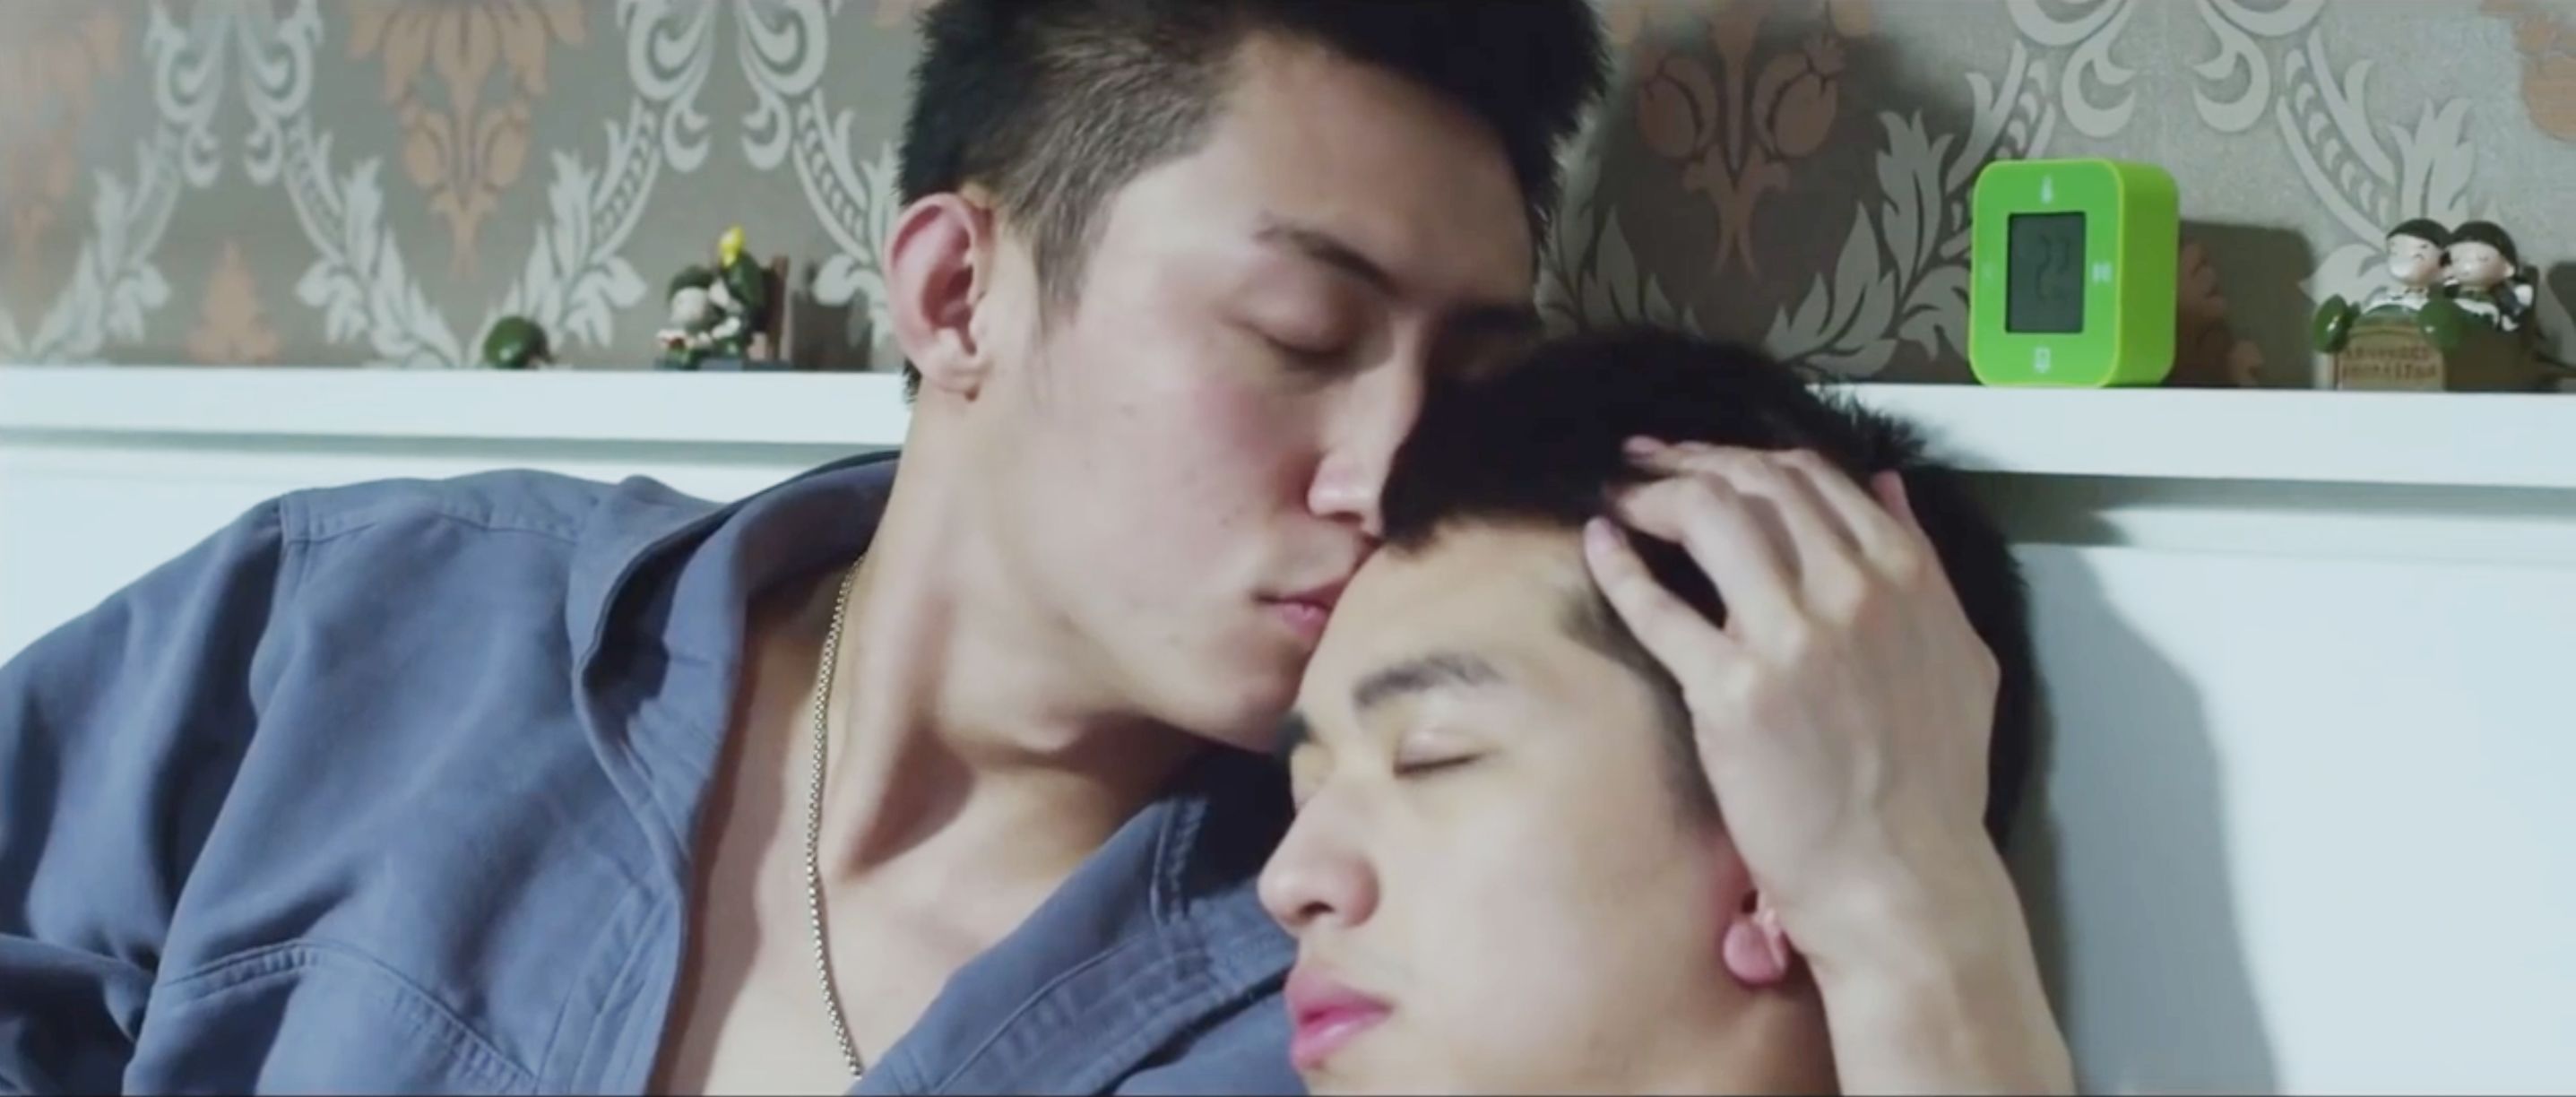 Indian Jabardasti Sleeping Xxx - China bans same-sex romance from TV screens | CNN